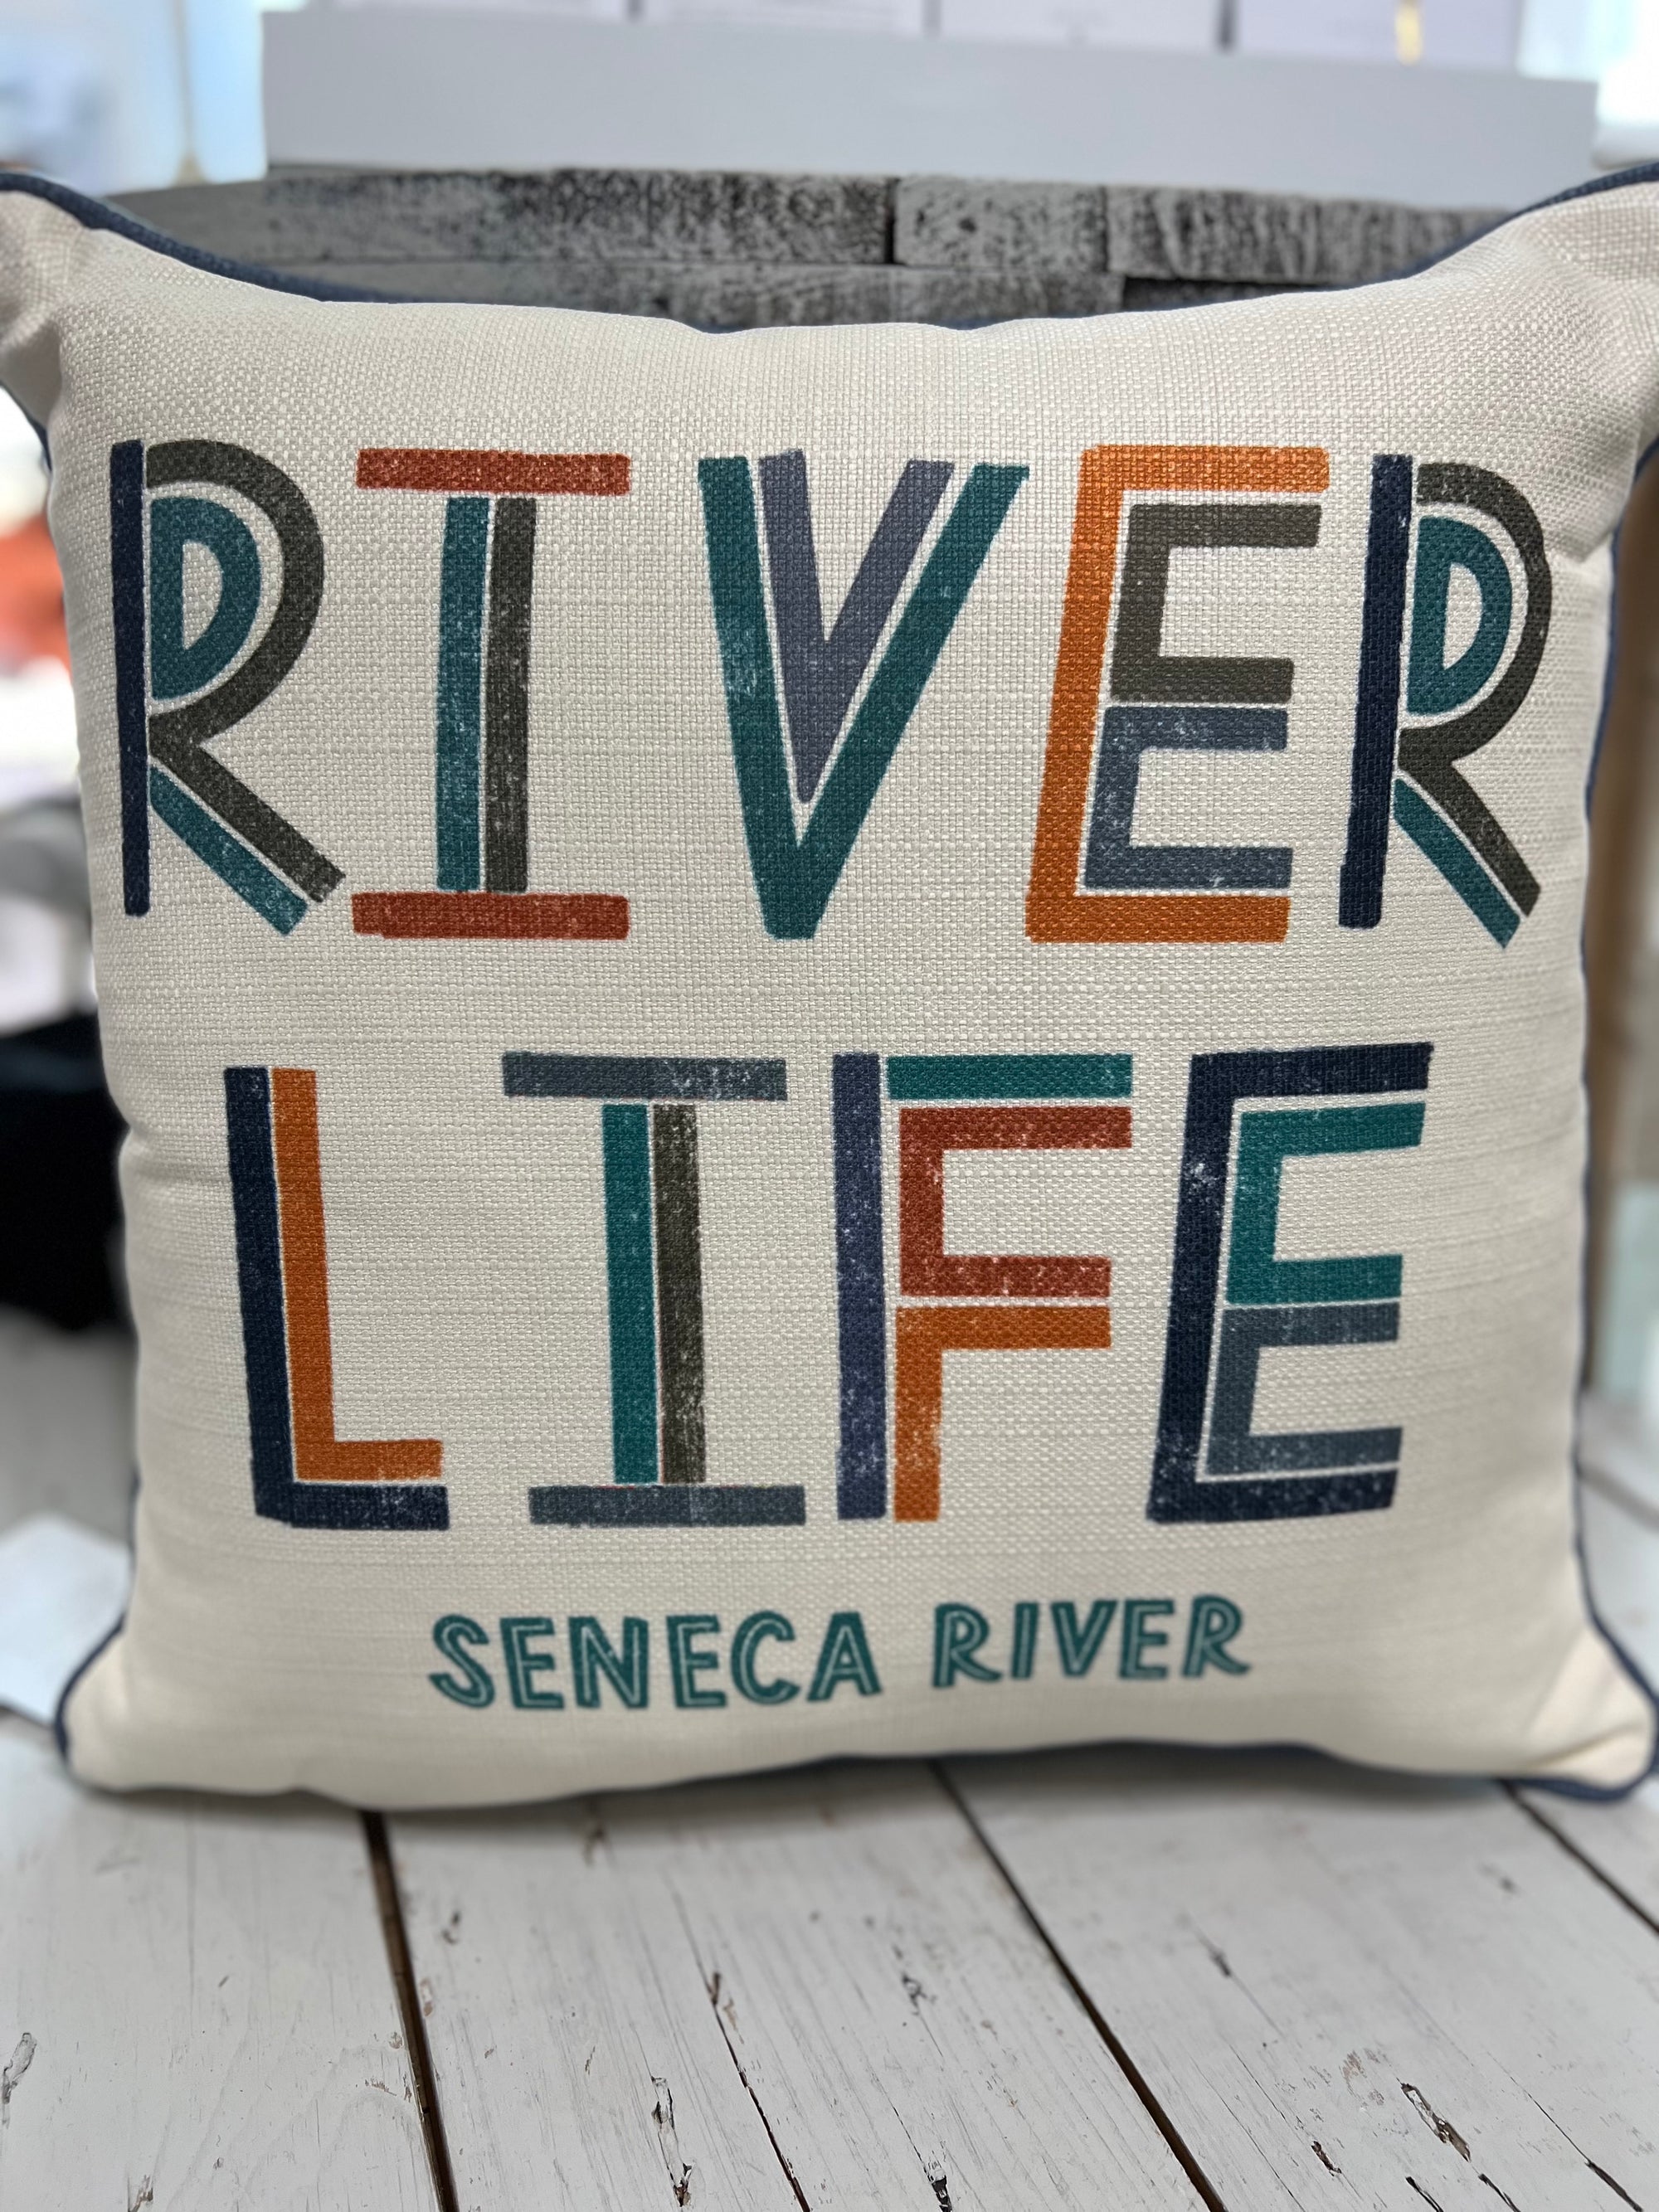 River Life  Seneca River Pillow